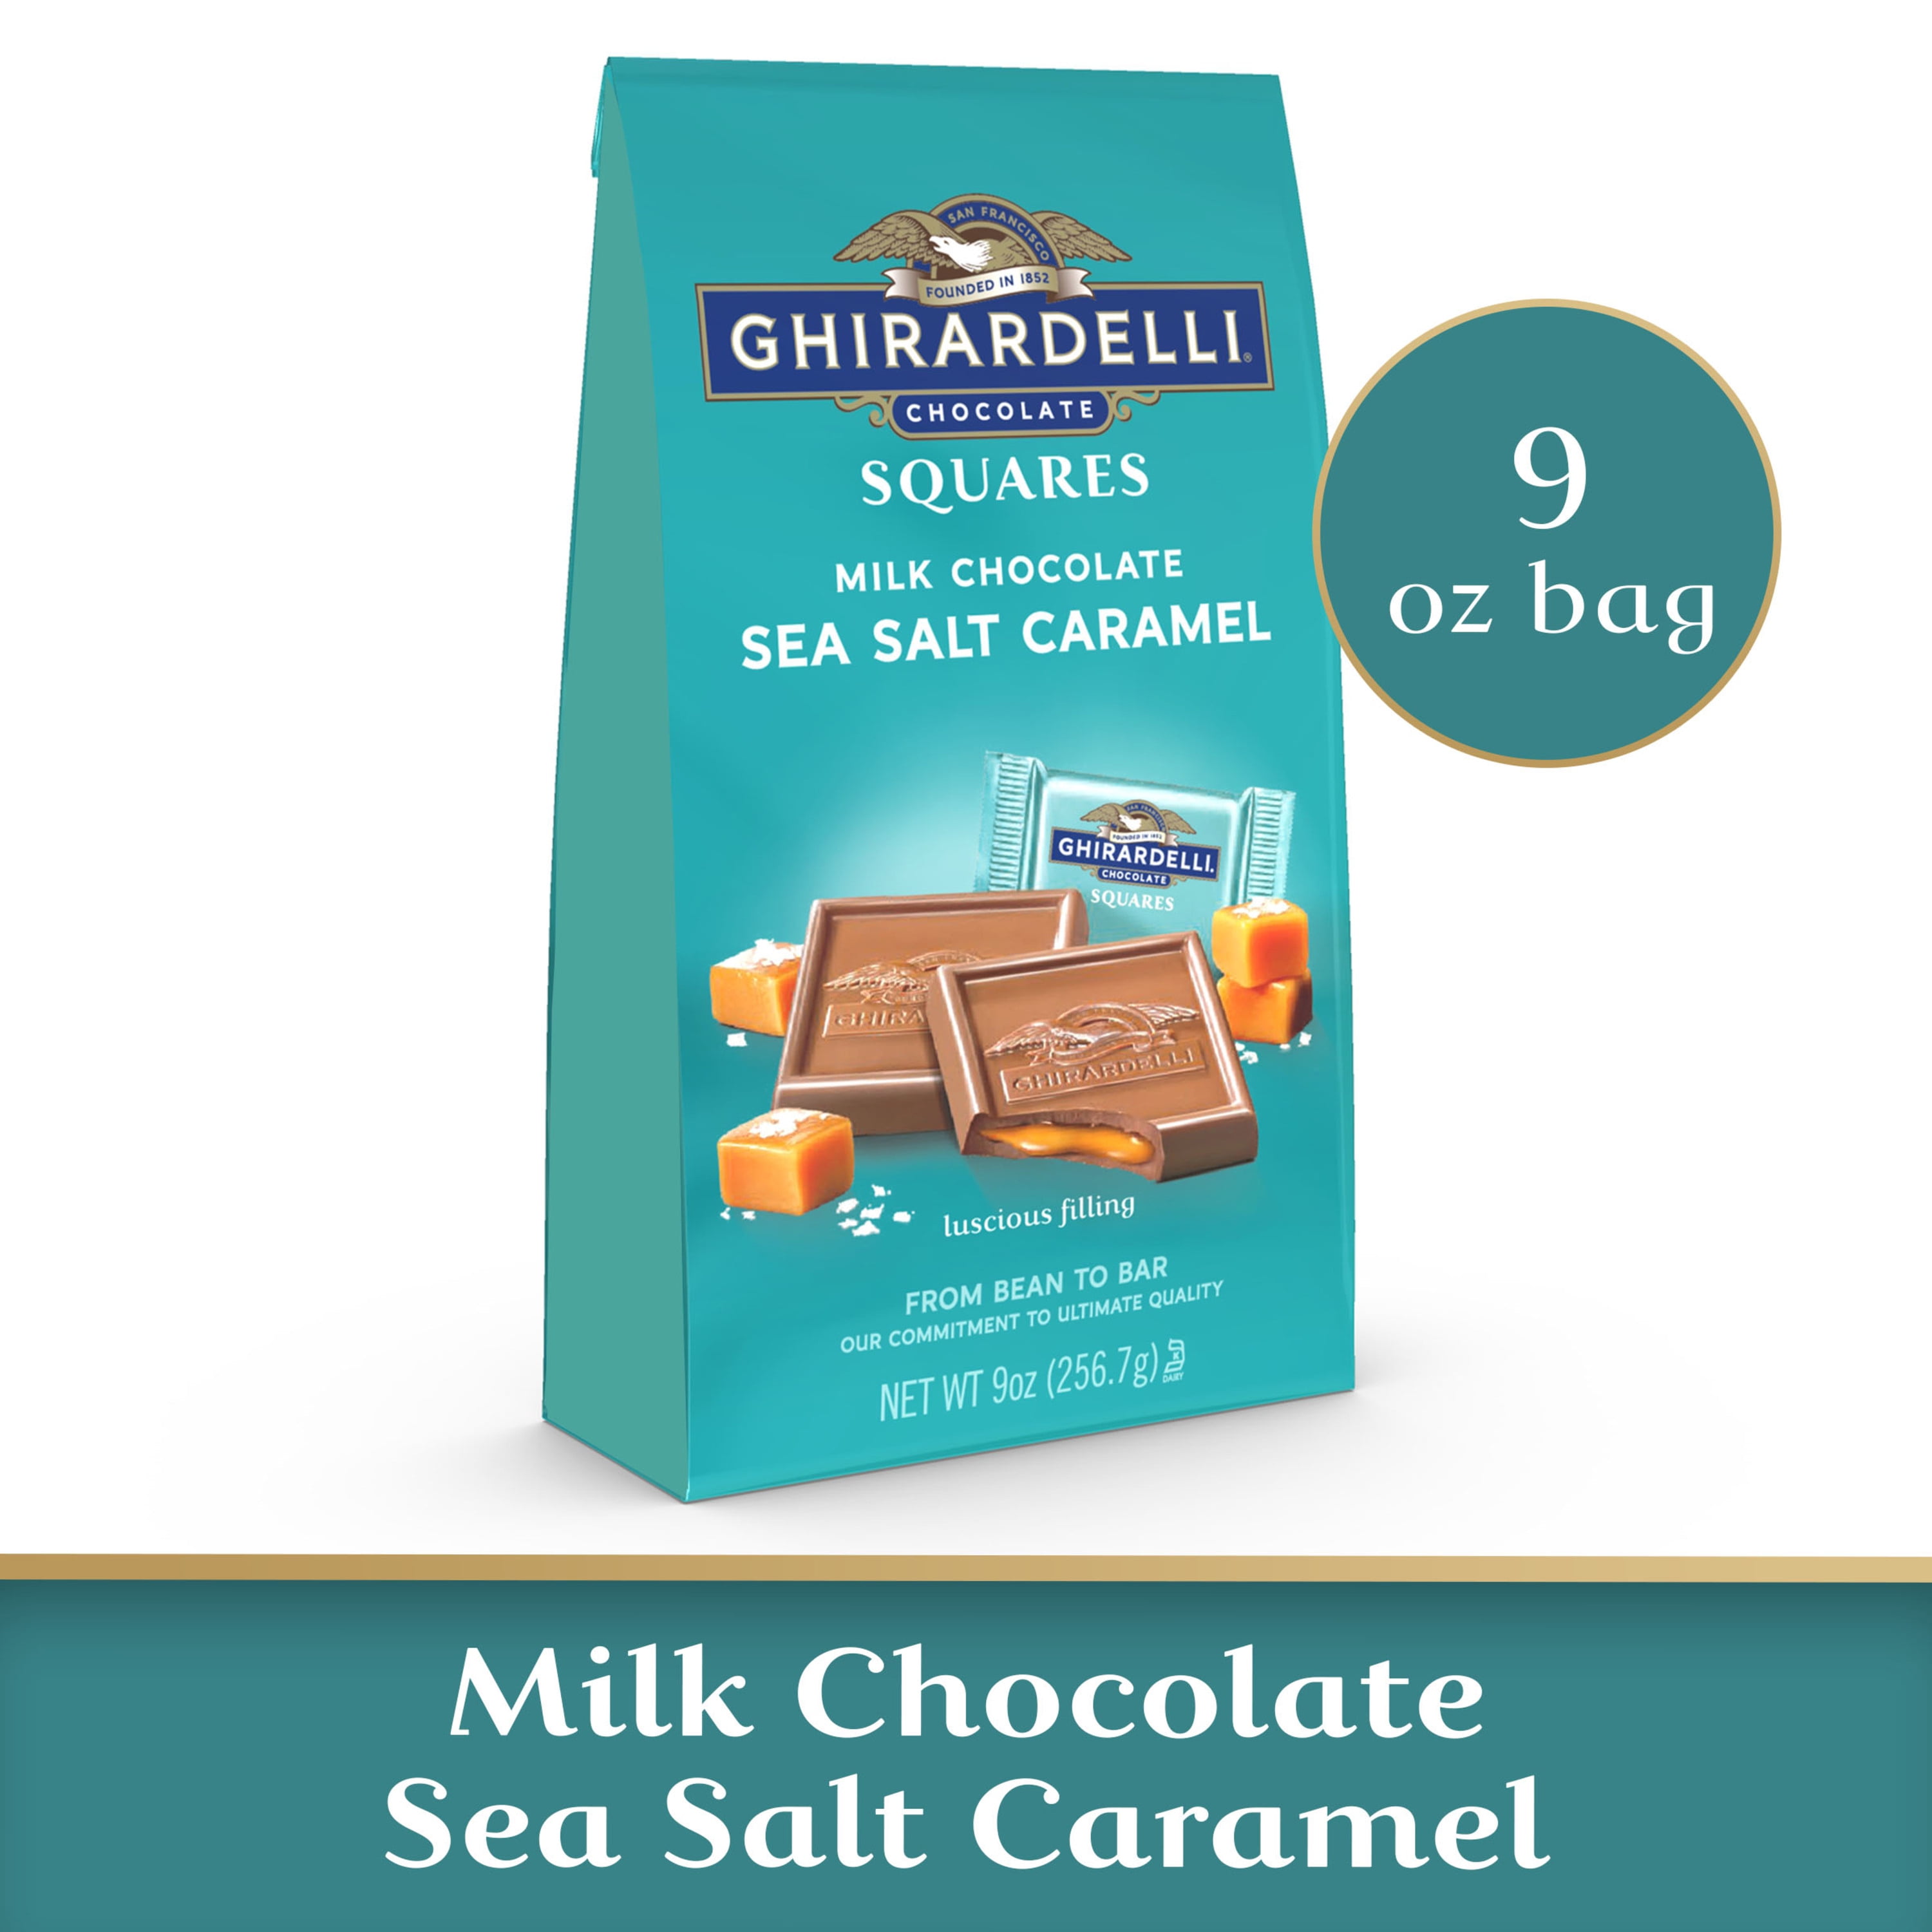 Ghirardelli Milk Chocolate Sea Salt Caramel Chocolate Squares, 9 oz Bag